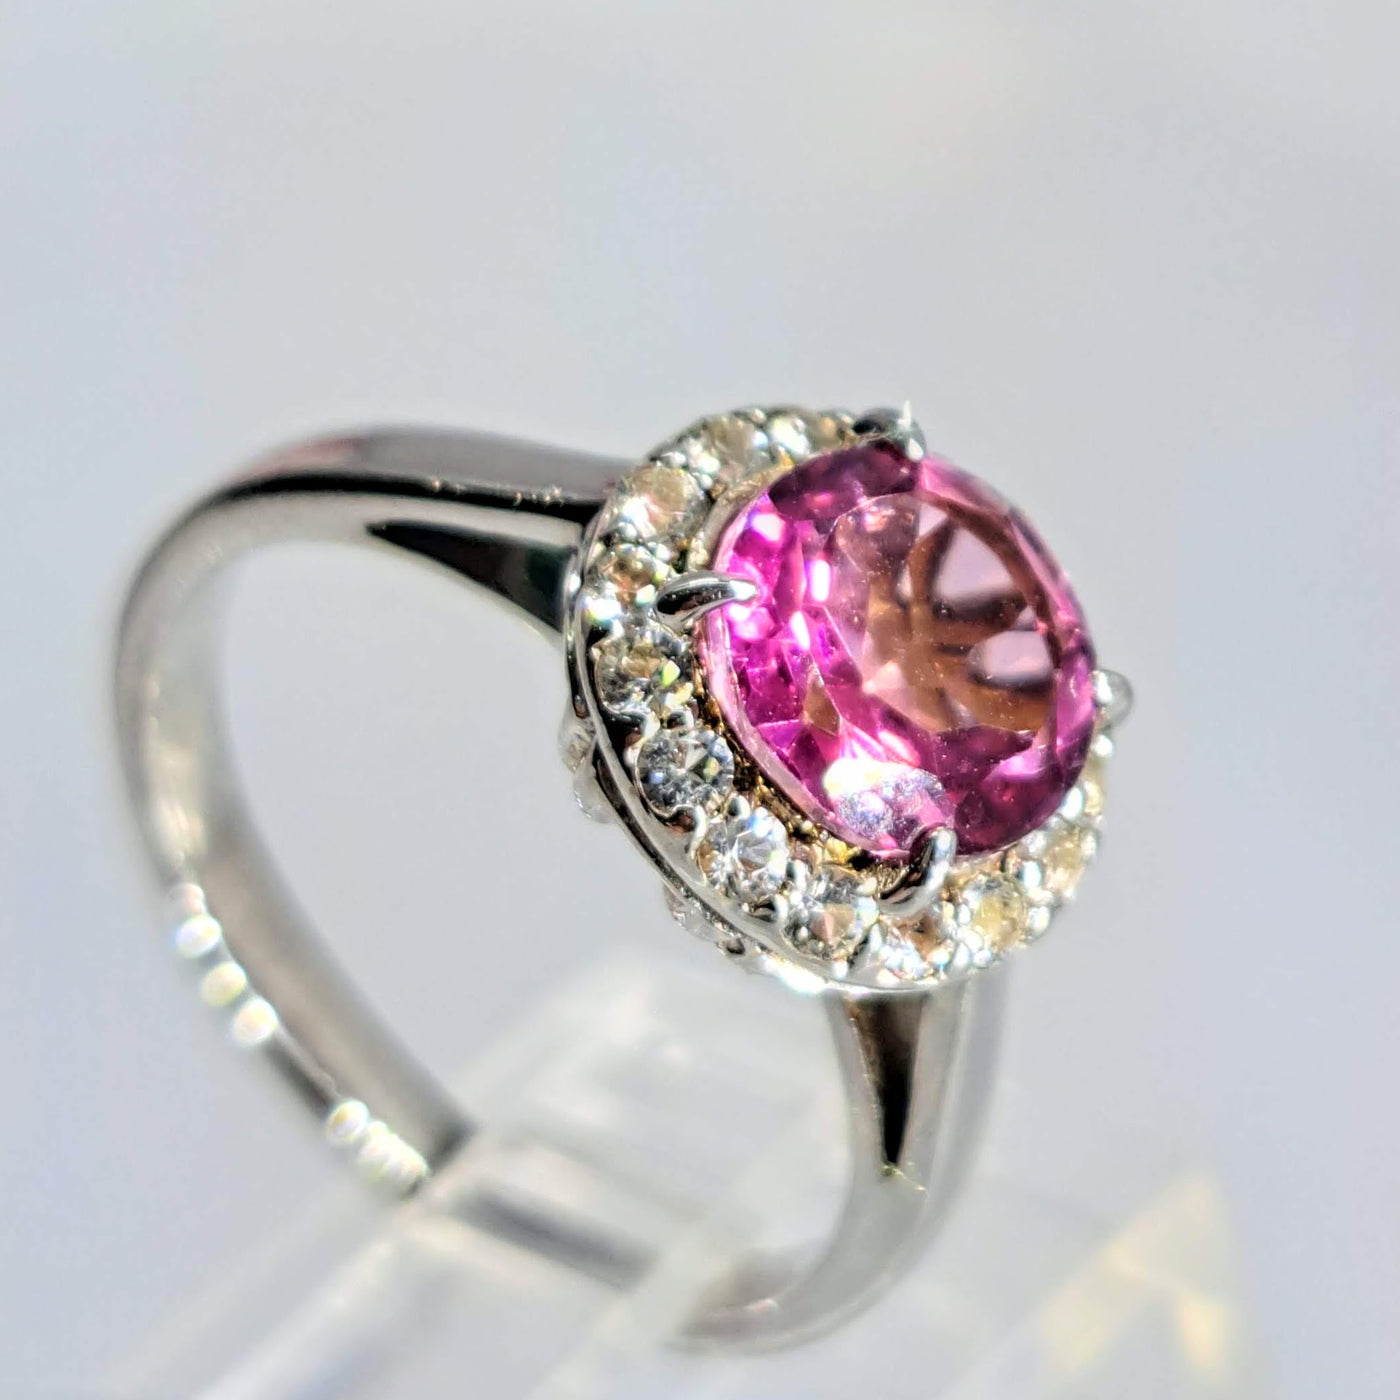 "My Precious" Sz 6 Ring - Pink Topaz, Zircon Stone, Anti-tarnish Sterling